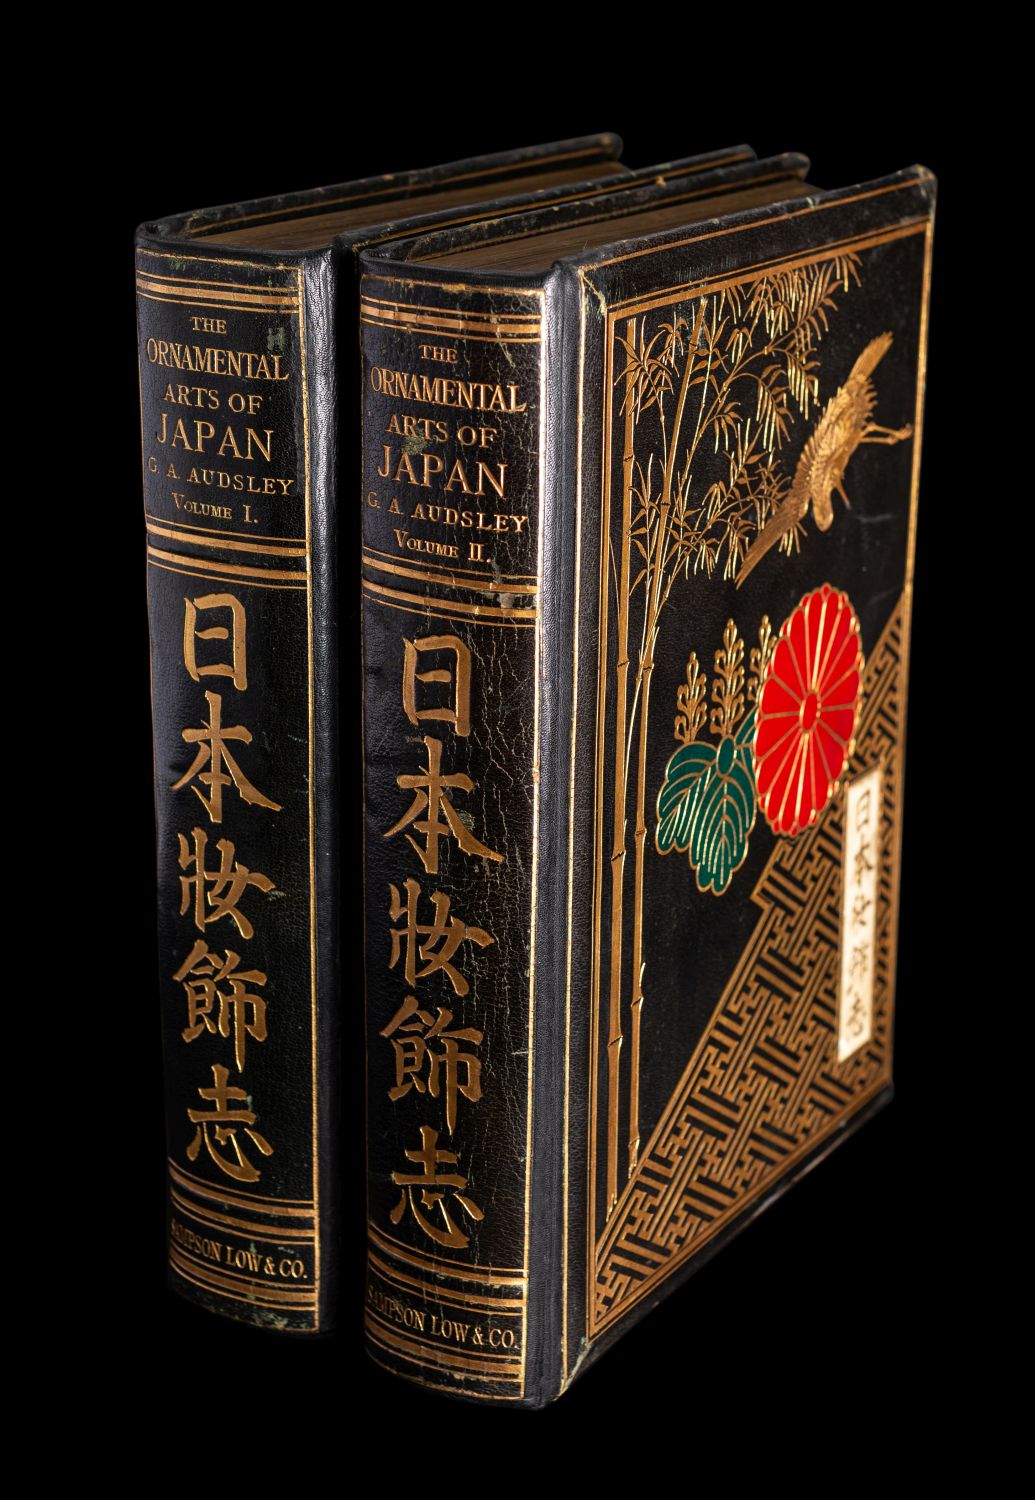 AUDSLEY, George Ashdown (1838-1925). The Ornamental Arts of Japan.